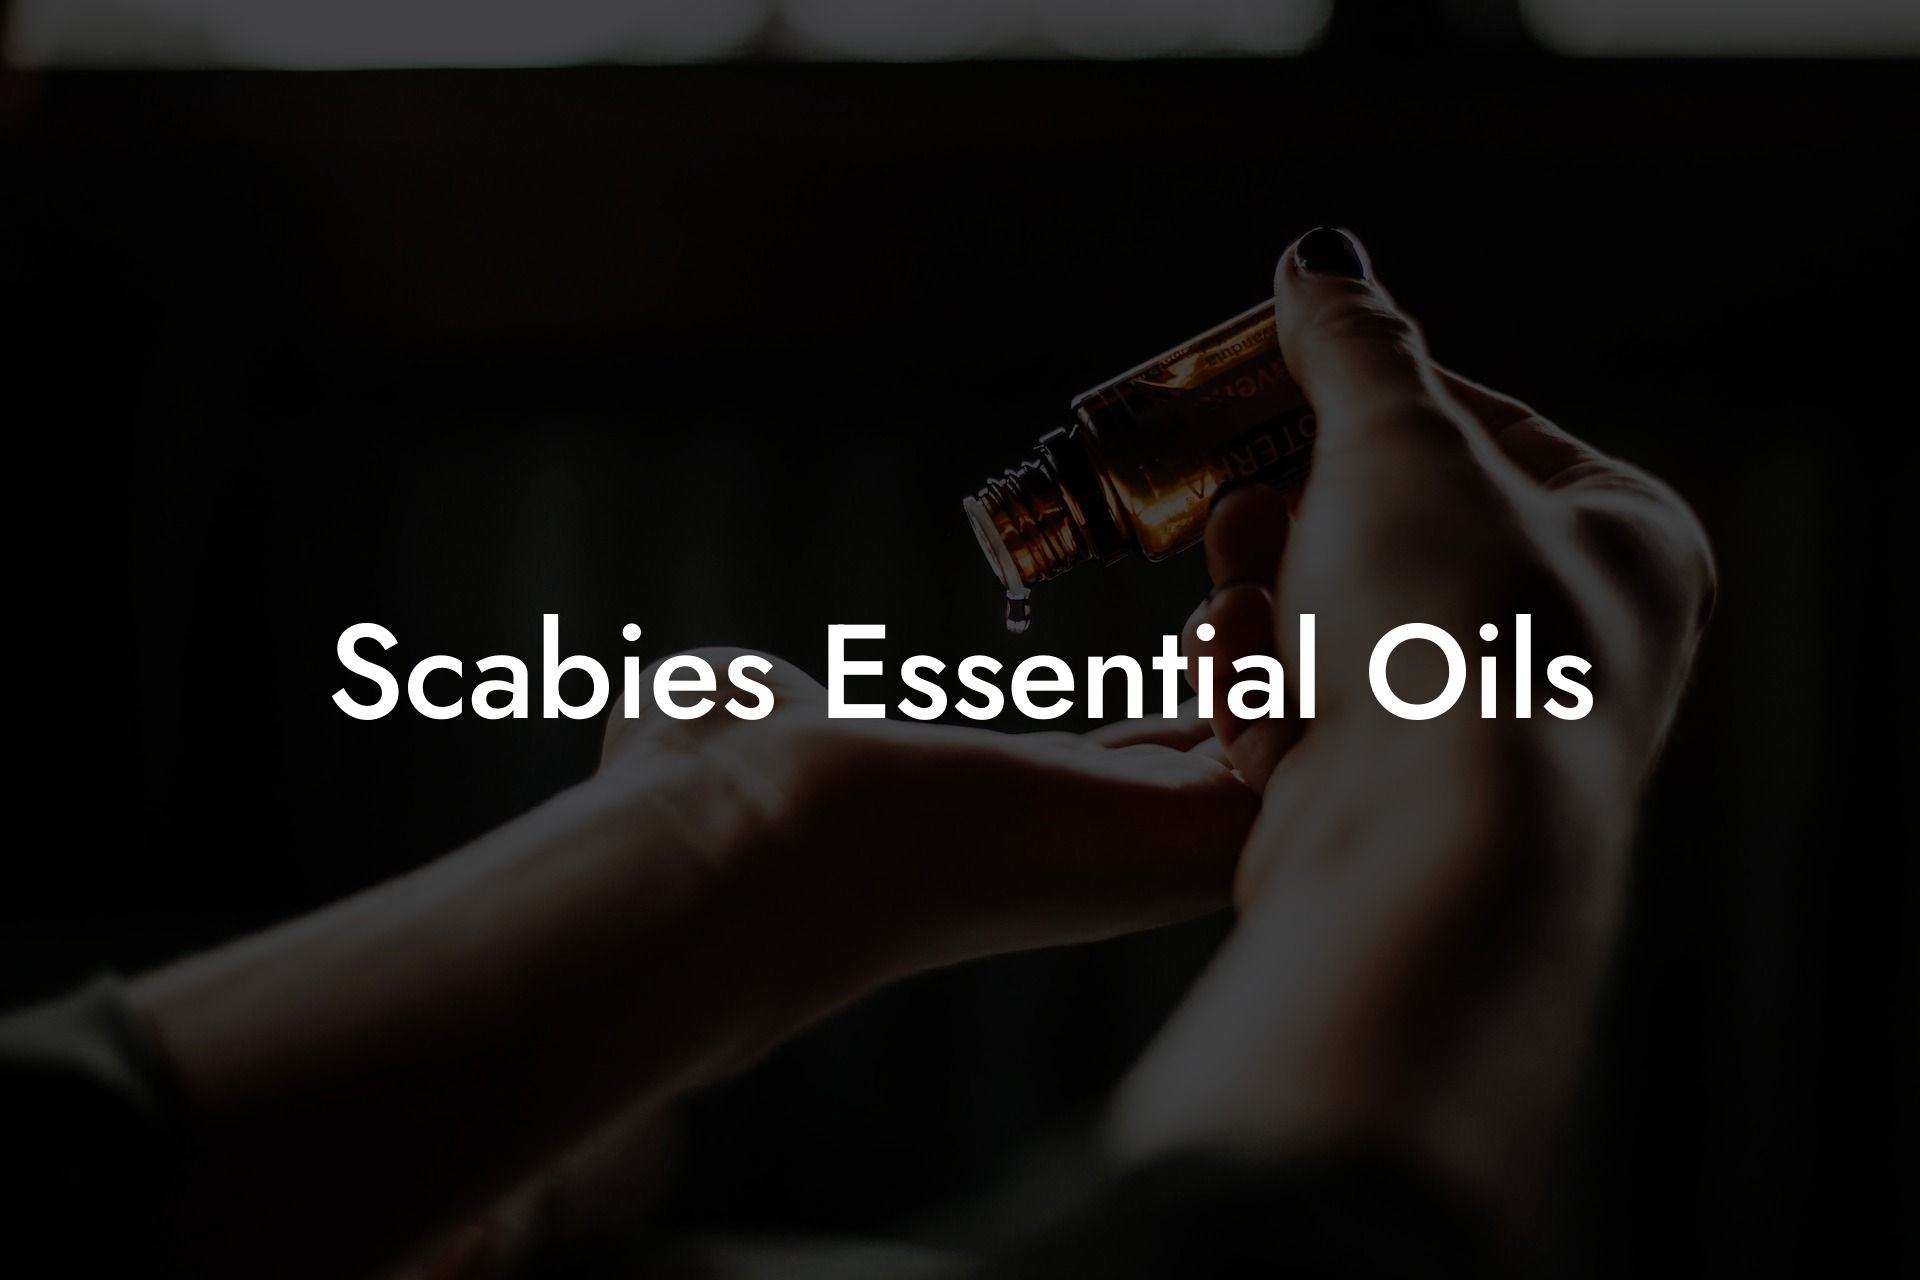 Scabies Essential Oils